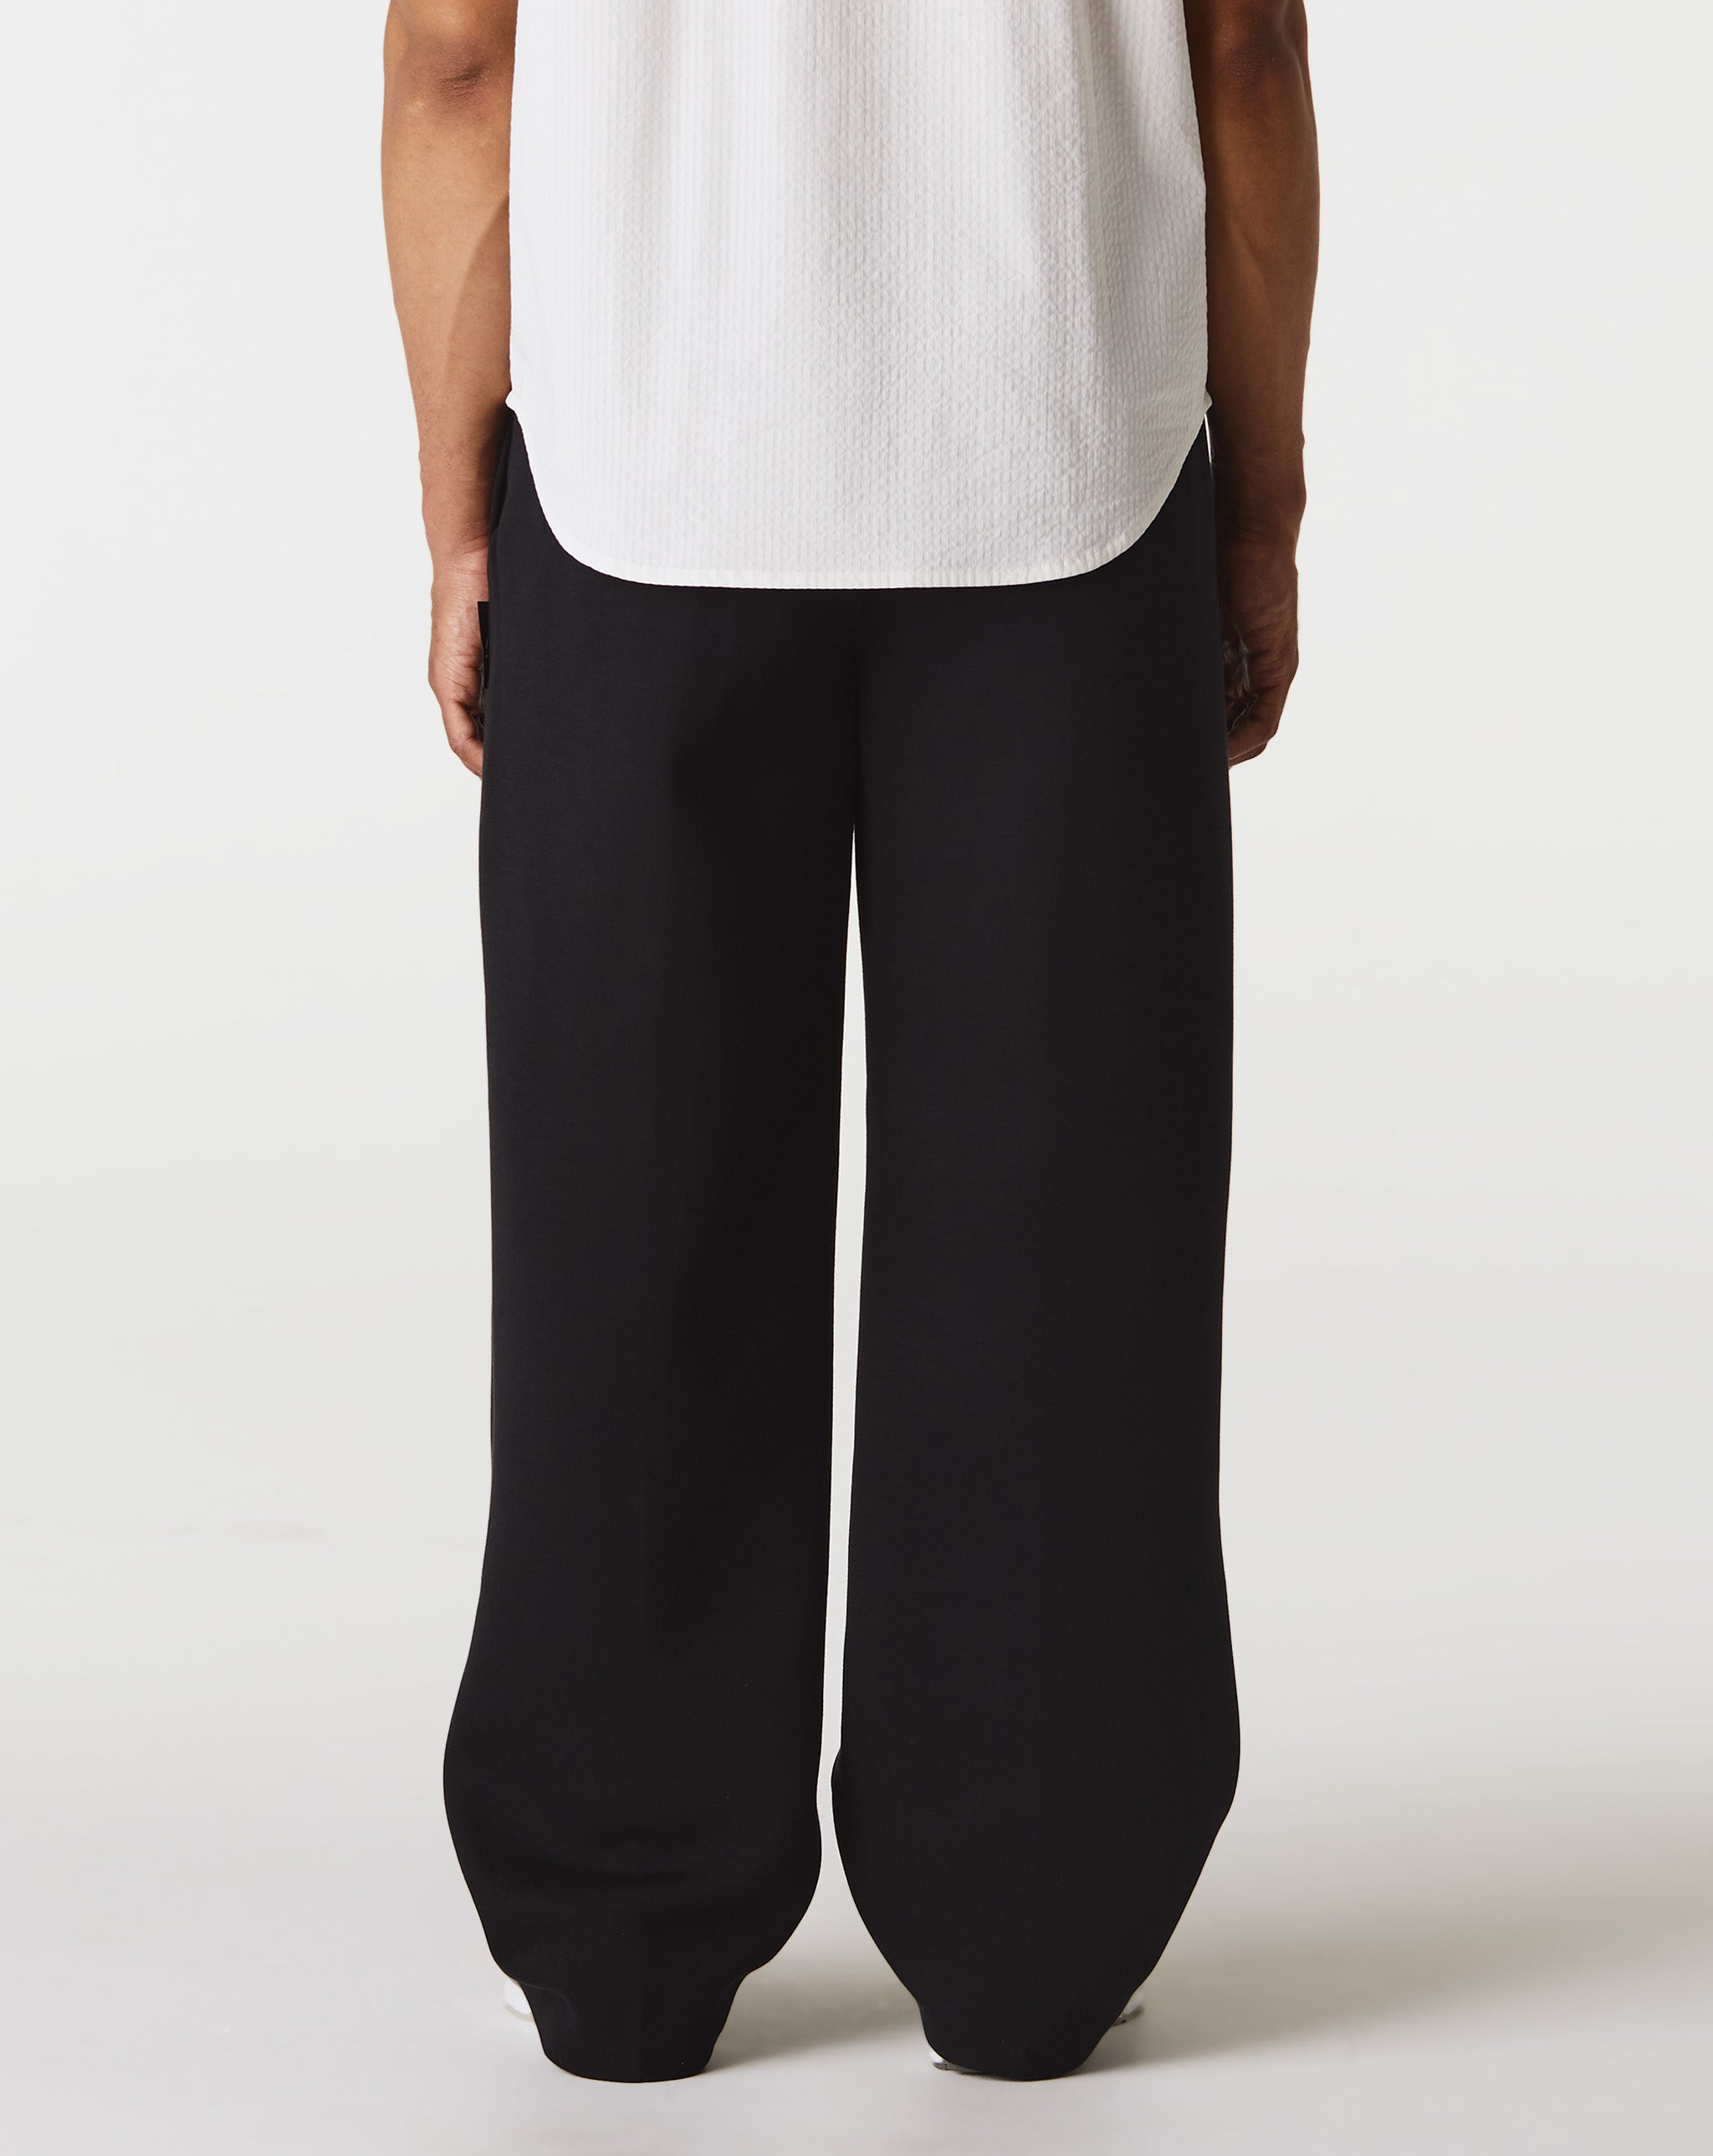 Nike Nina Chanel Abney x T-Shirt  - Cheap Cerbe Jordan outlet